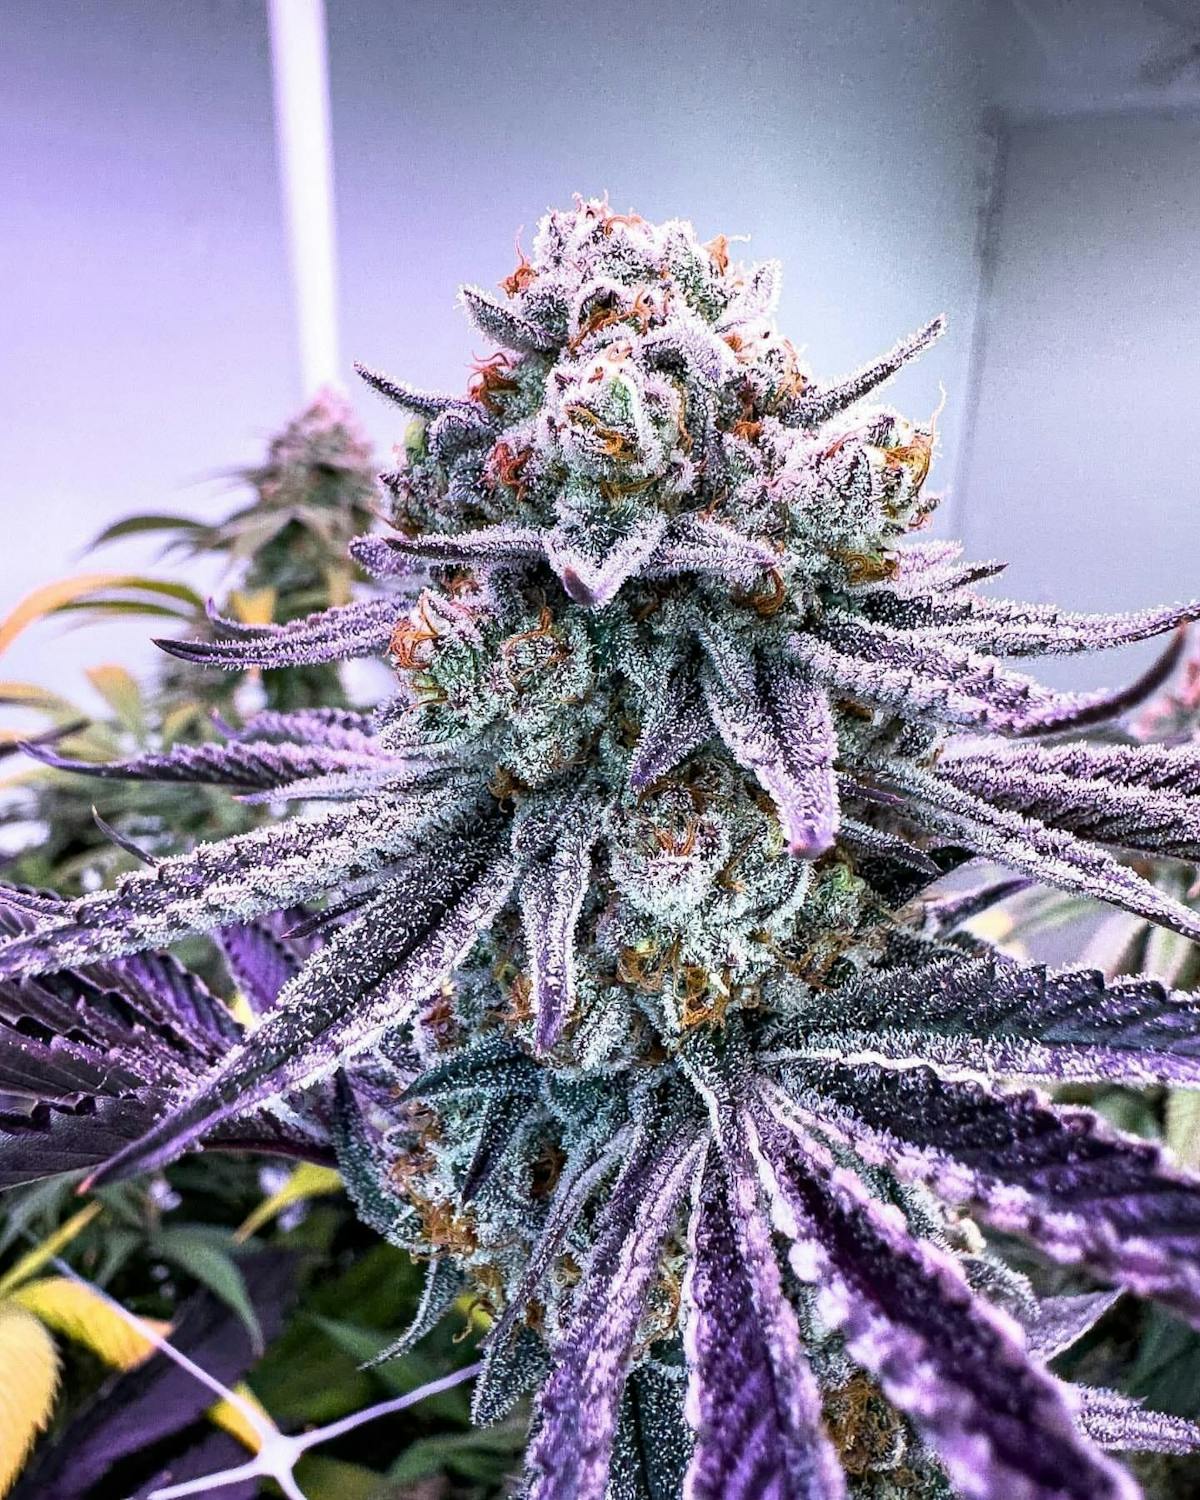 Cannabispflanze in der Blütephase.